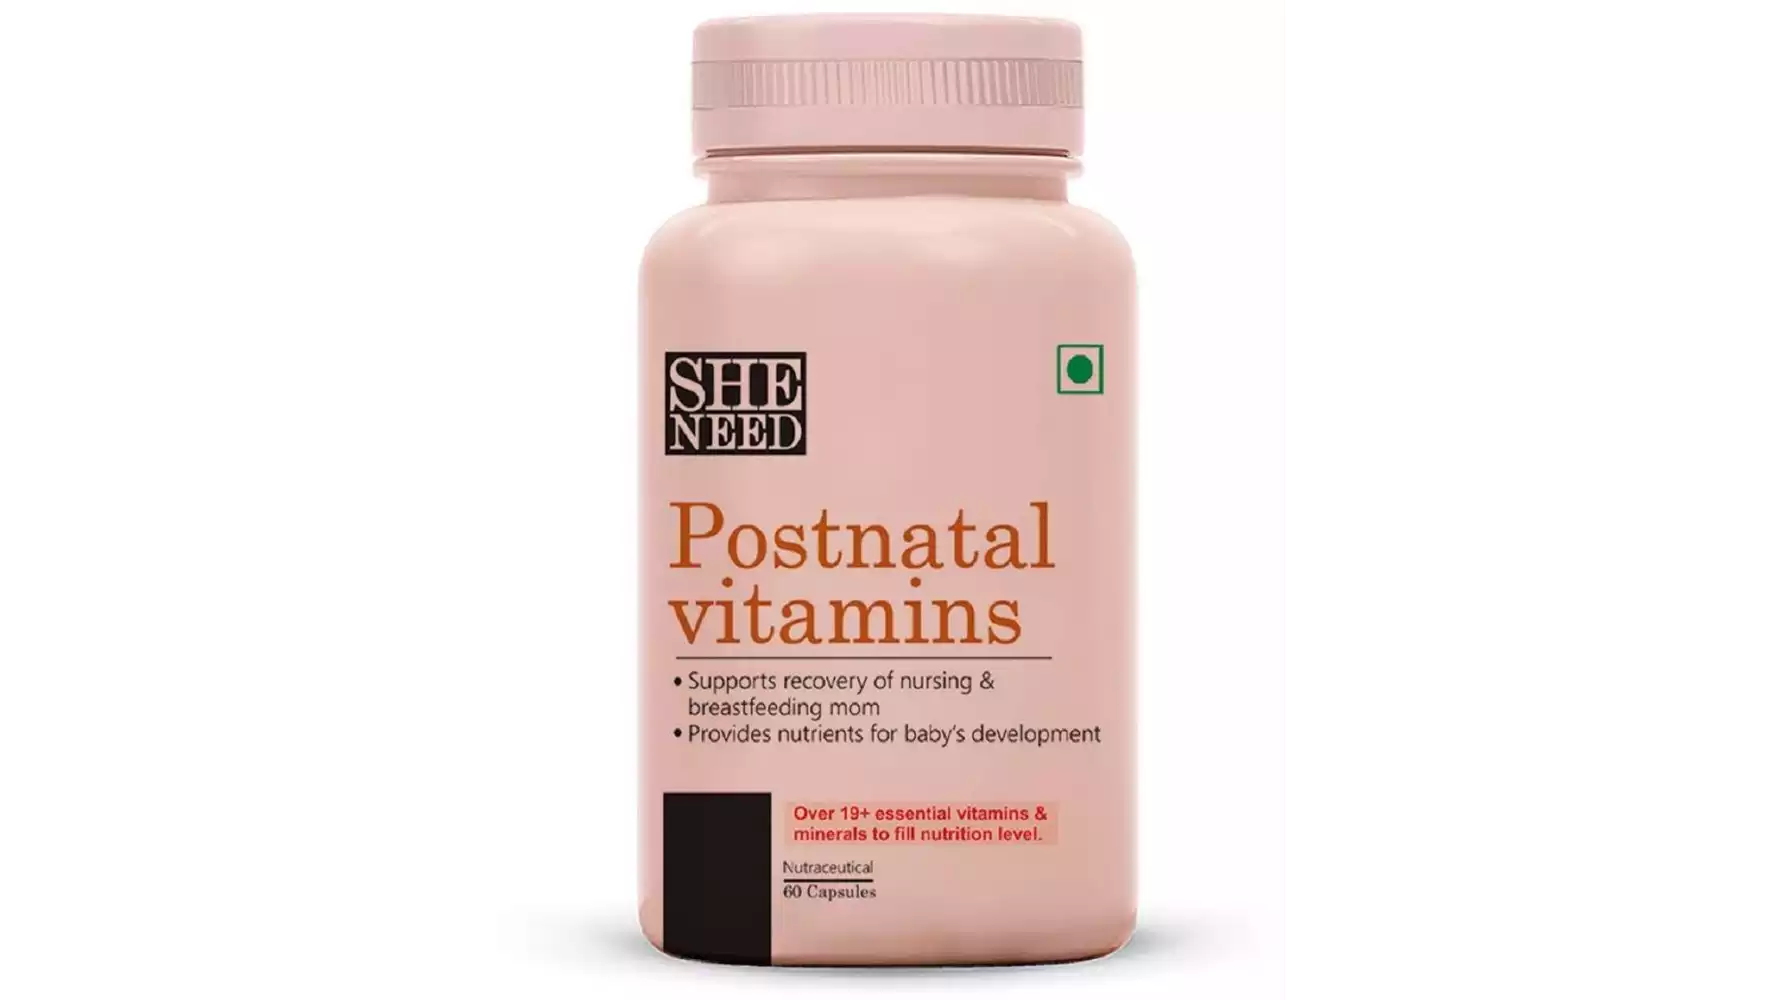 SheNeed Postnatal Vitamins Supplements (60caps)